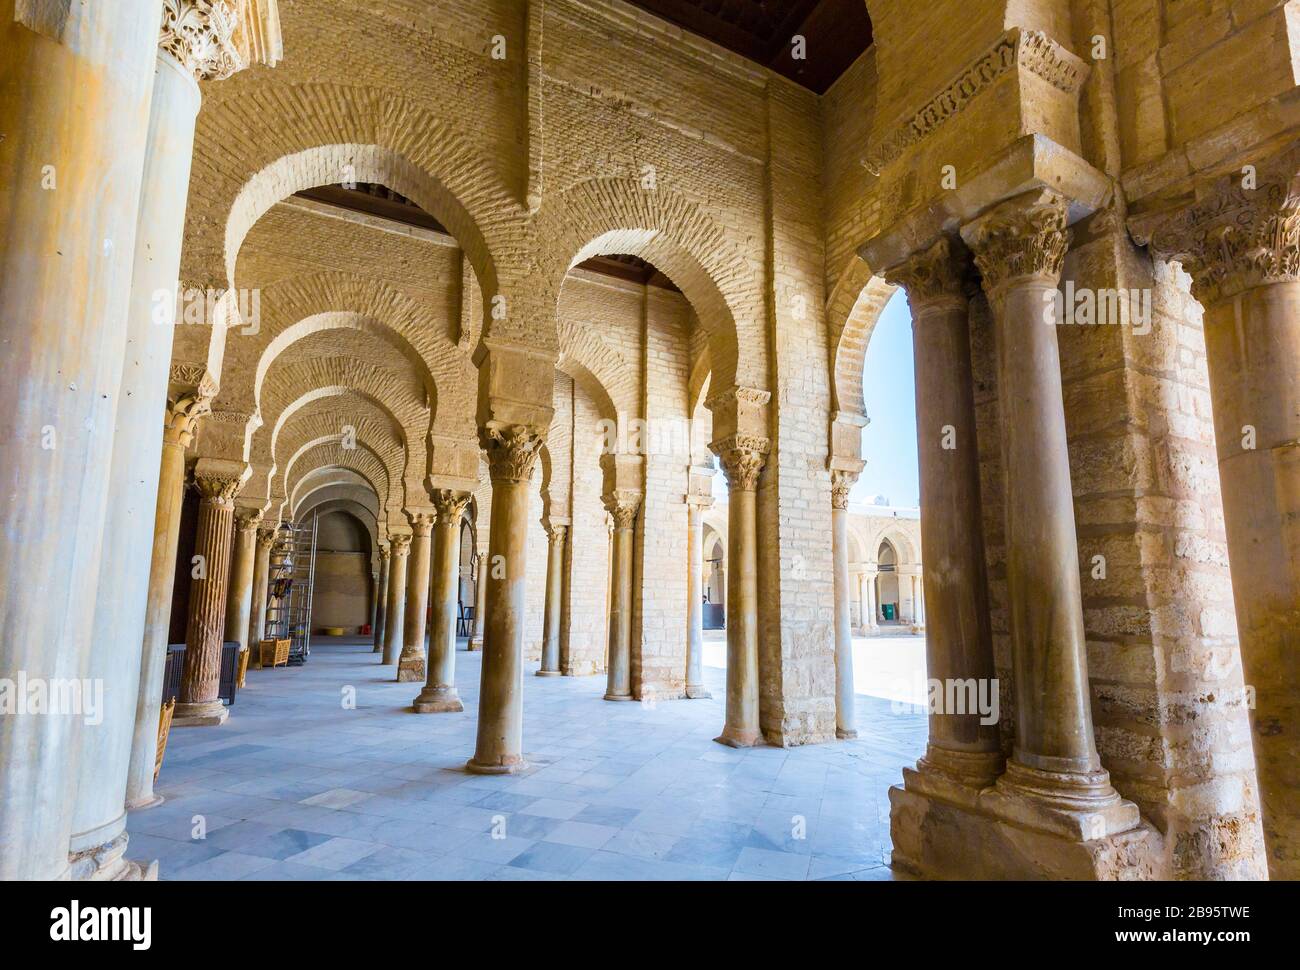 Portico with columns. Stock Photo